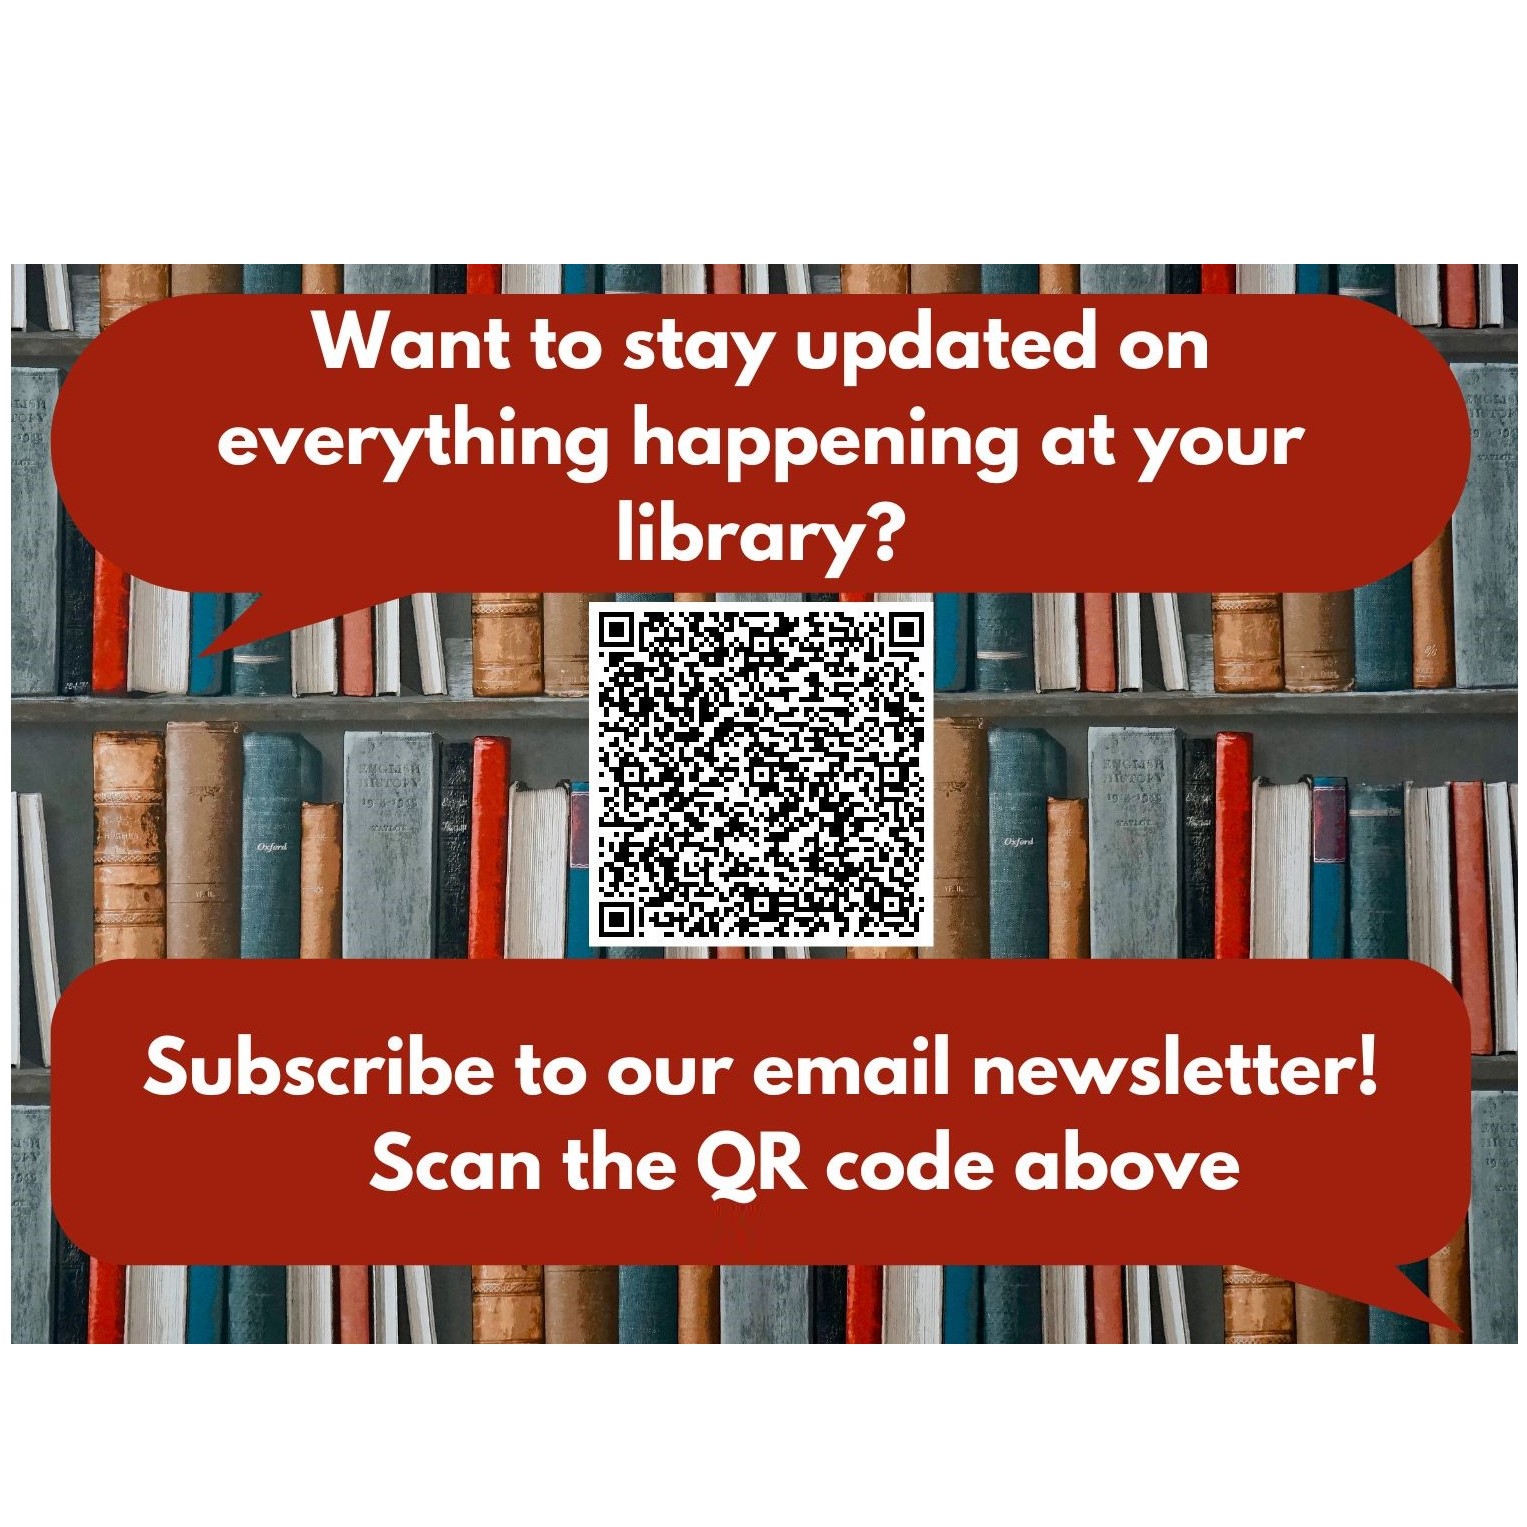 QR code for e-newsletter sign up